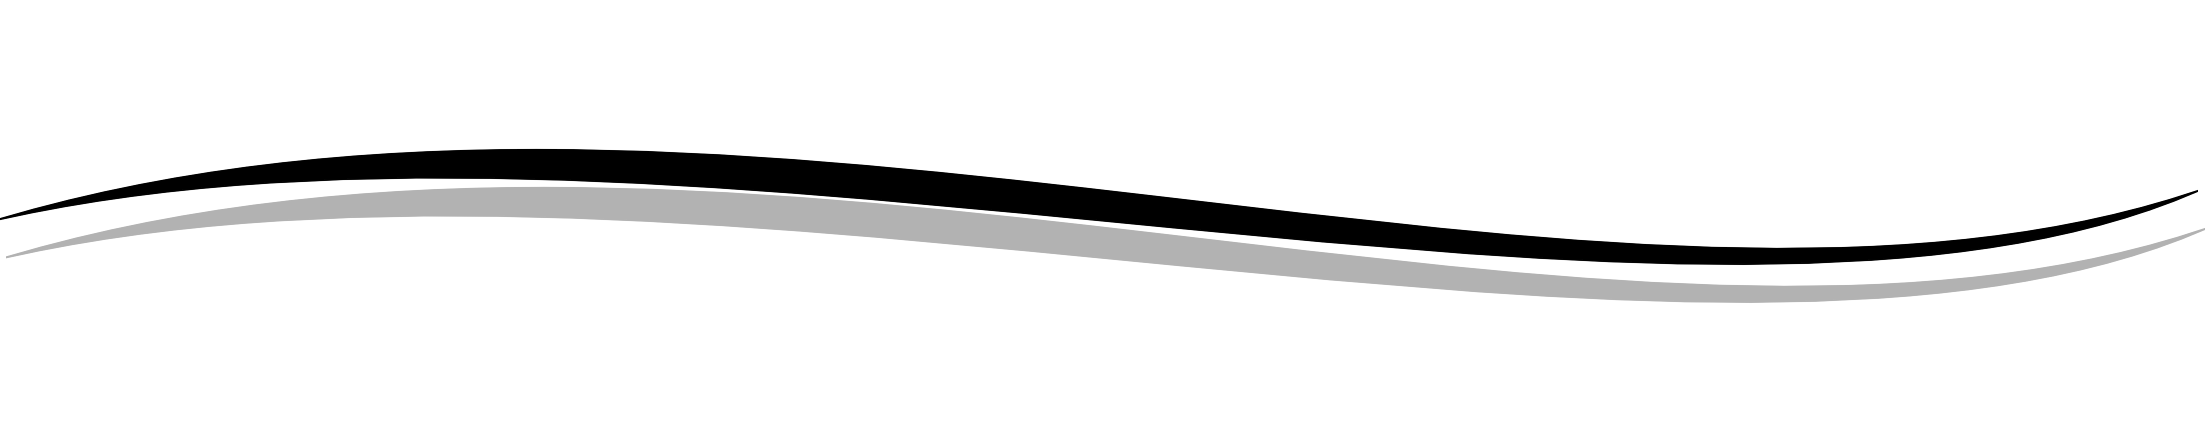 simple divider clip art